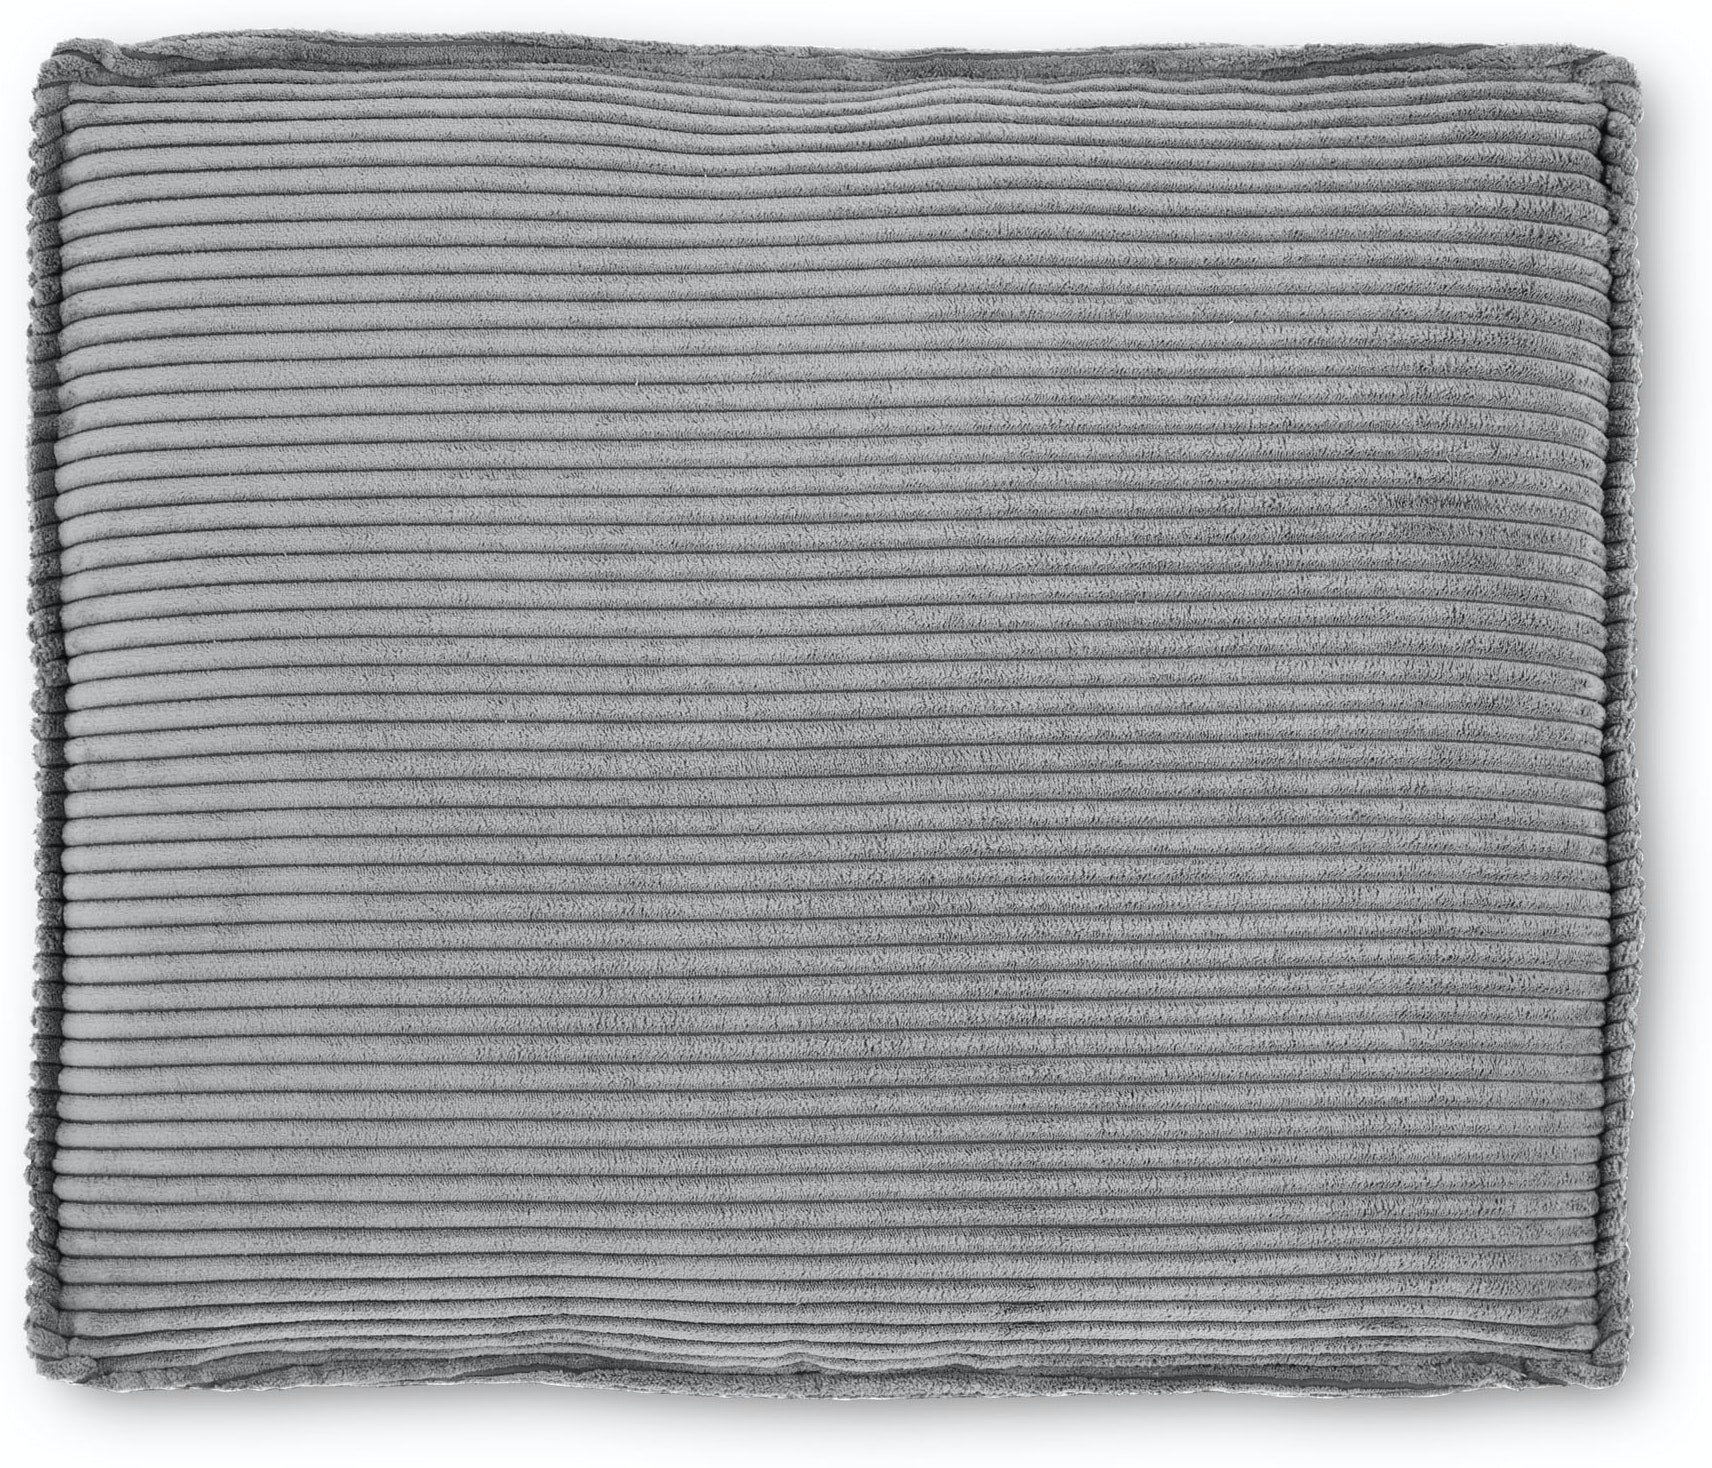 LAFORMA Blok pude i grå bred søm fløjlsbukser, 50 x 60 cm